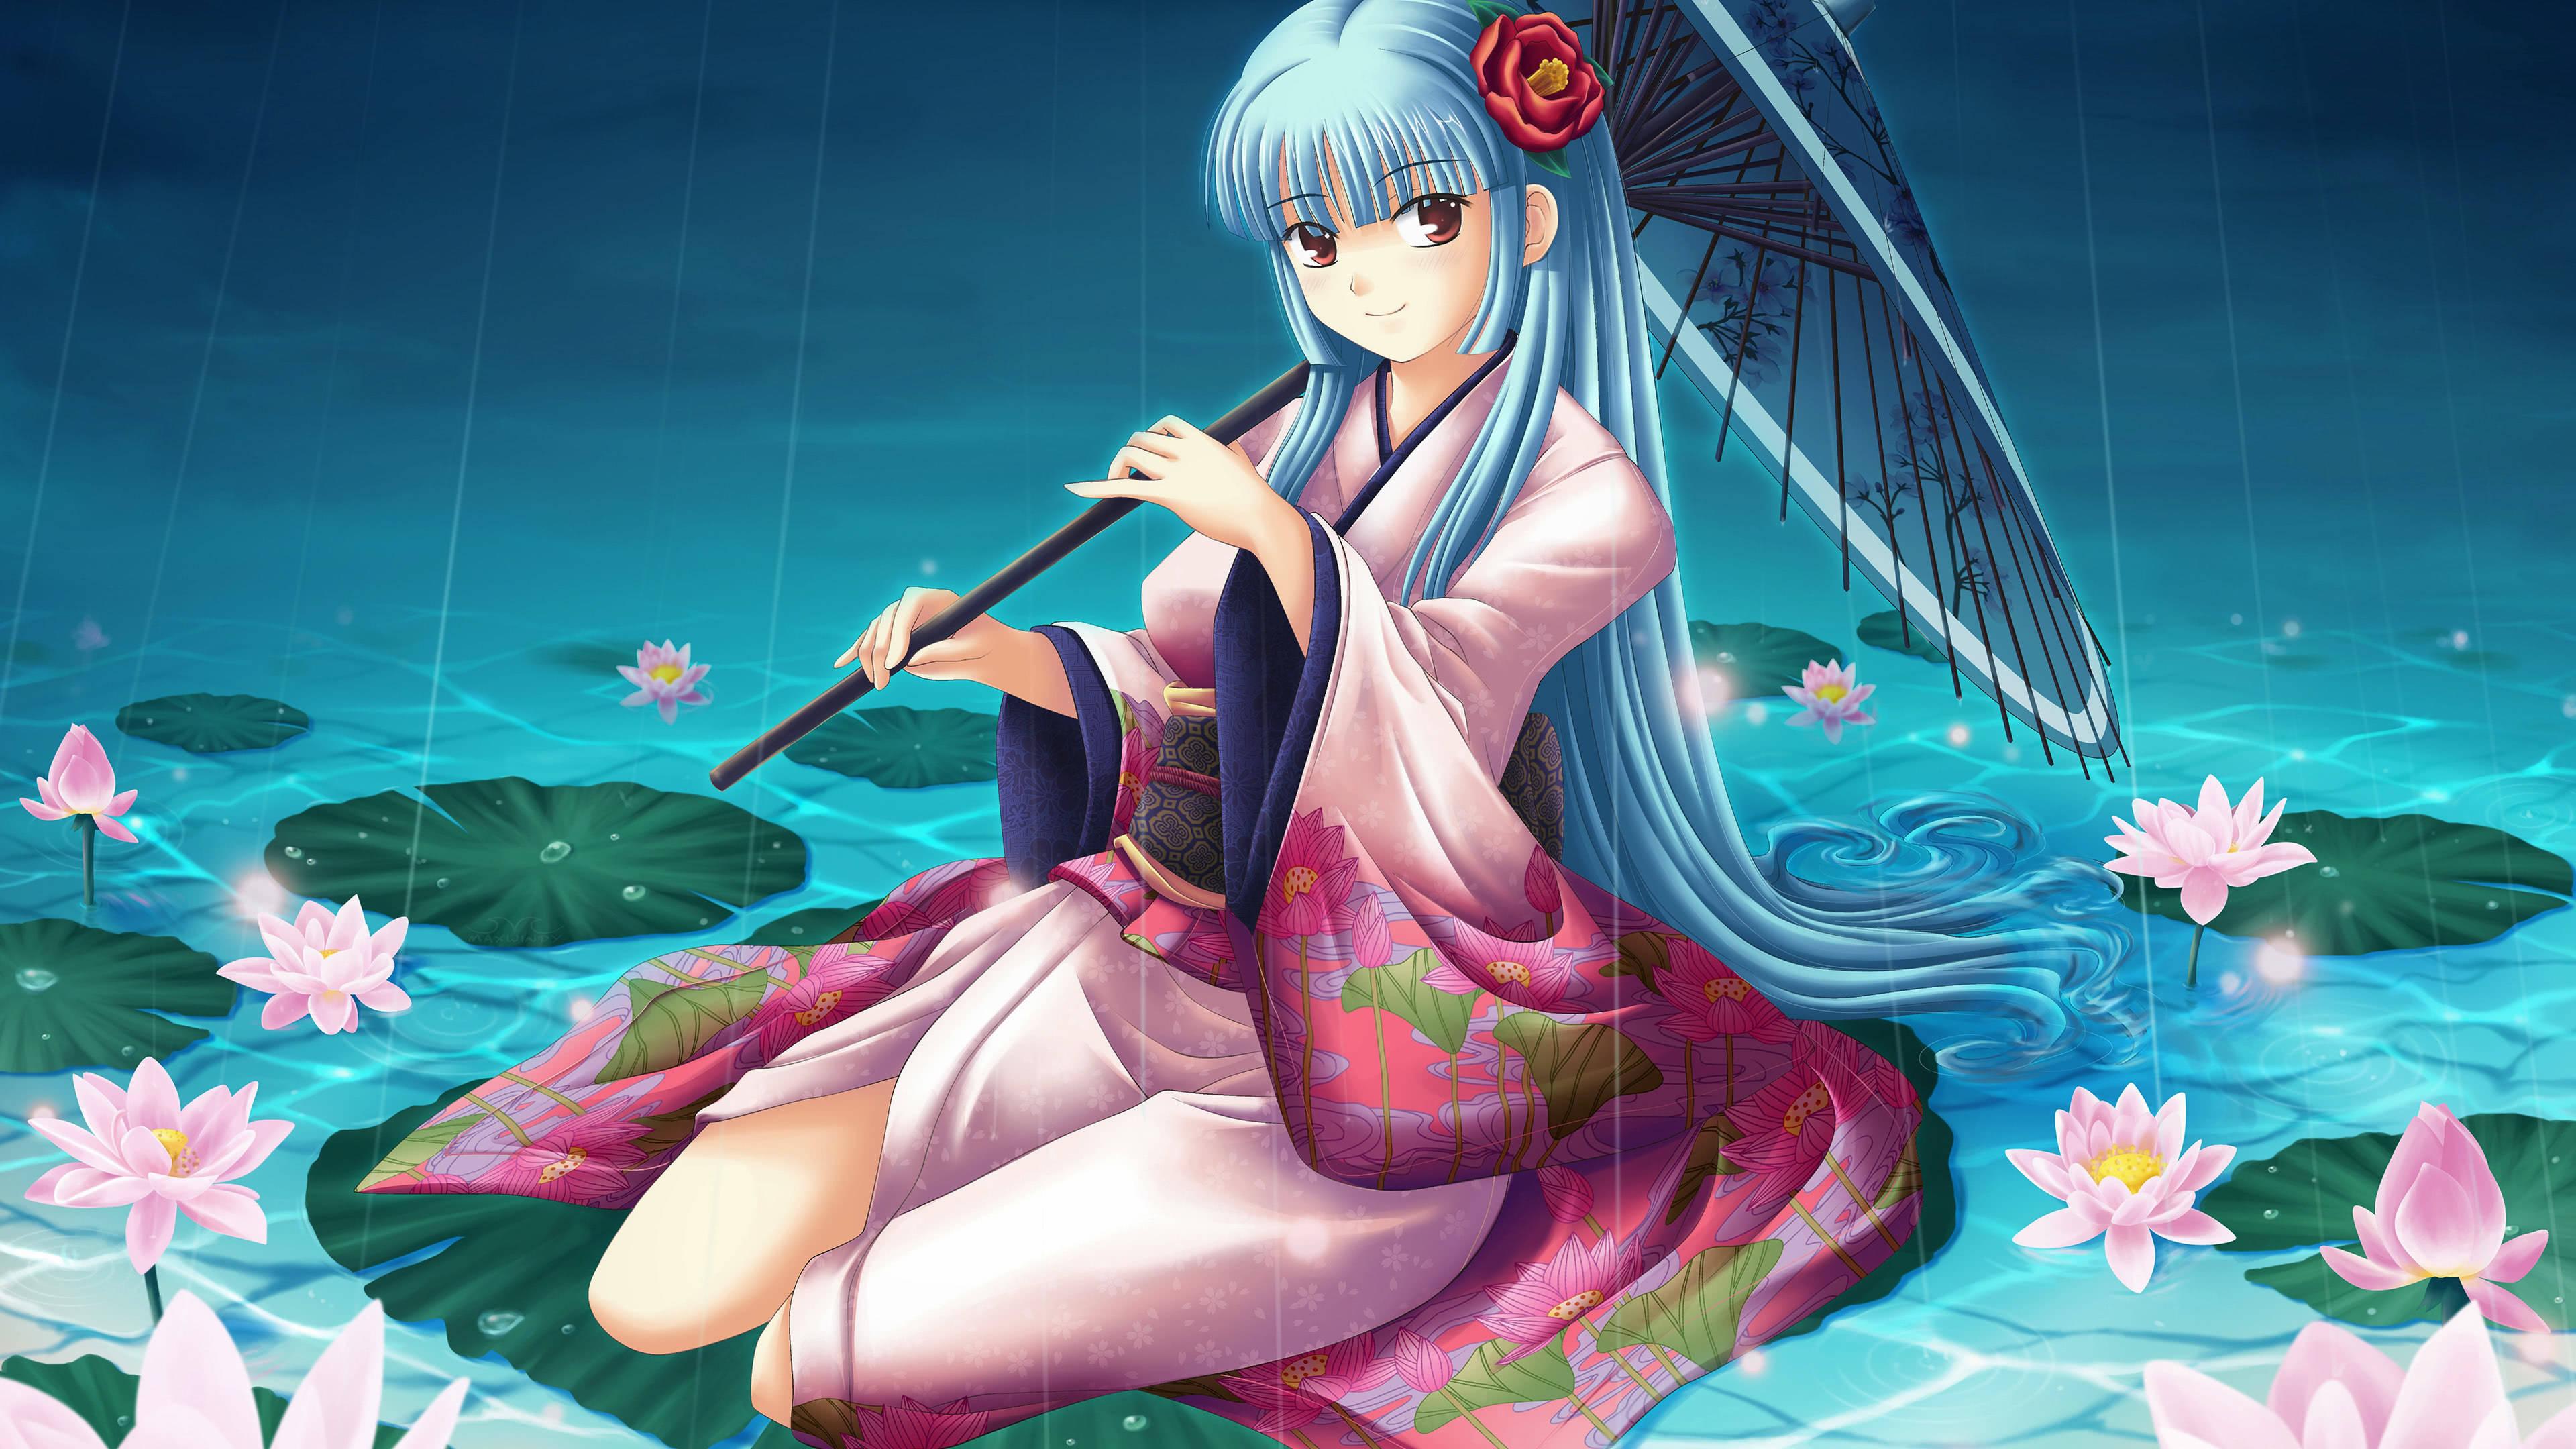 Anime Girl In Kimono On Water Lily UHD 4K Wallpaper